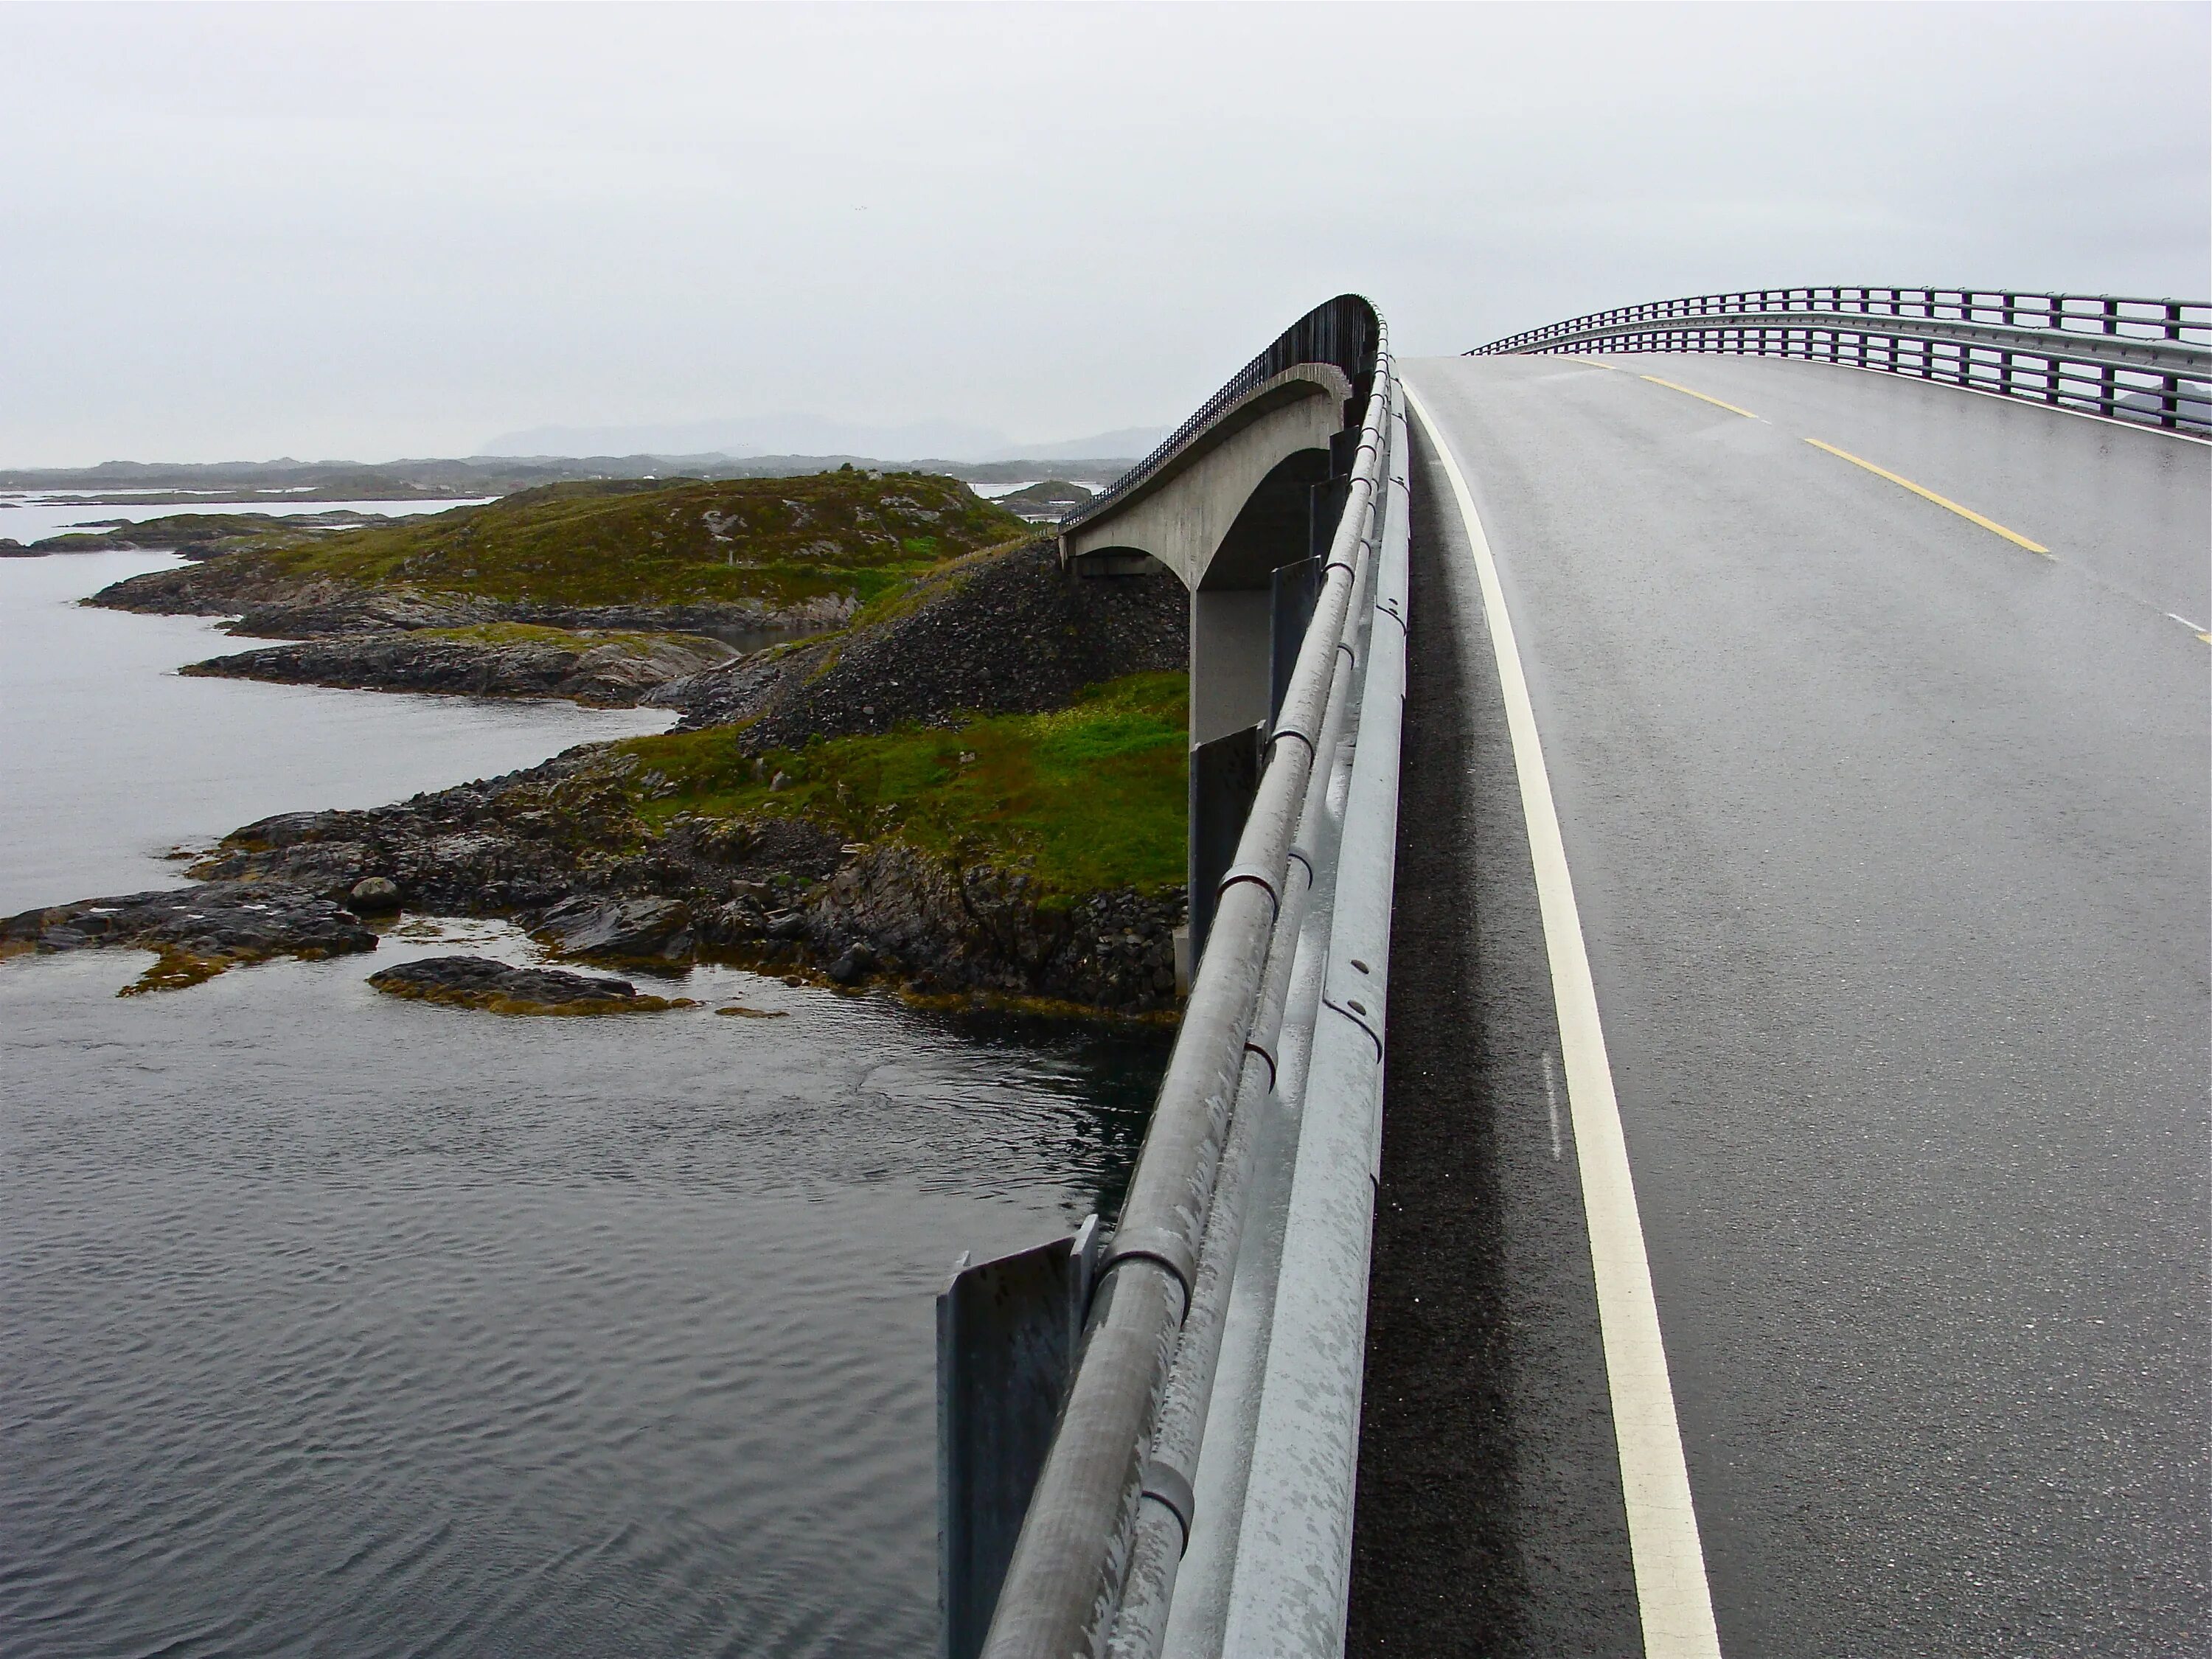 Мост в никуда. Мост Storseisundet, Норвегия. Мост Storseisundet Bridge в Норвегии. Storsizandeckij most norwegija.